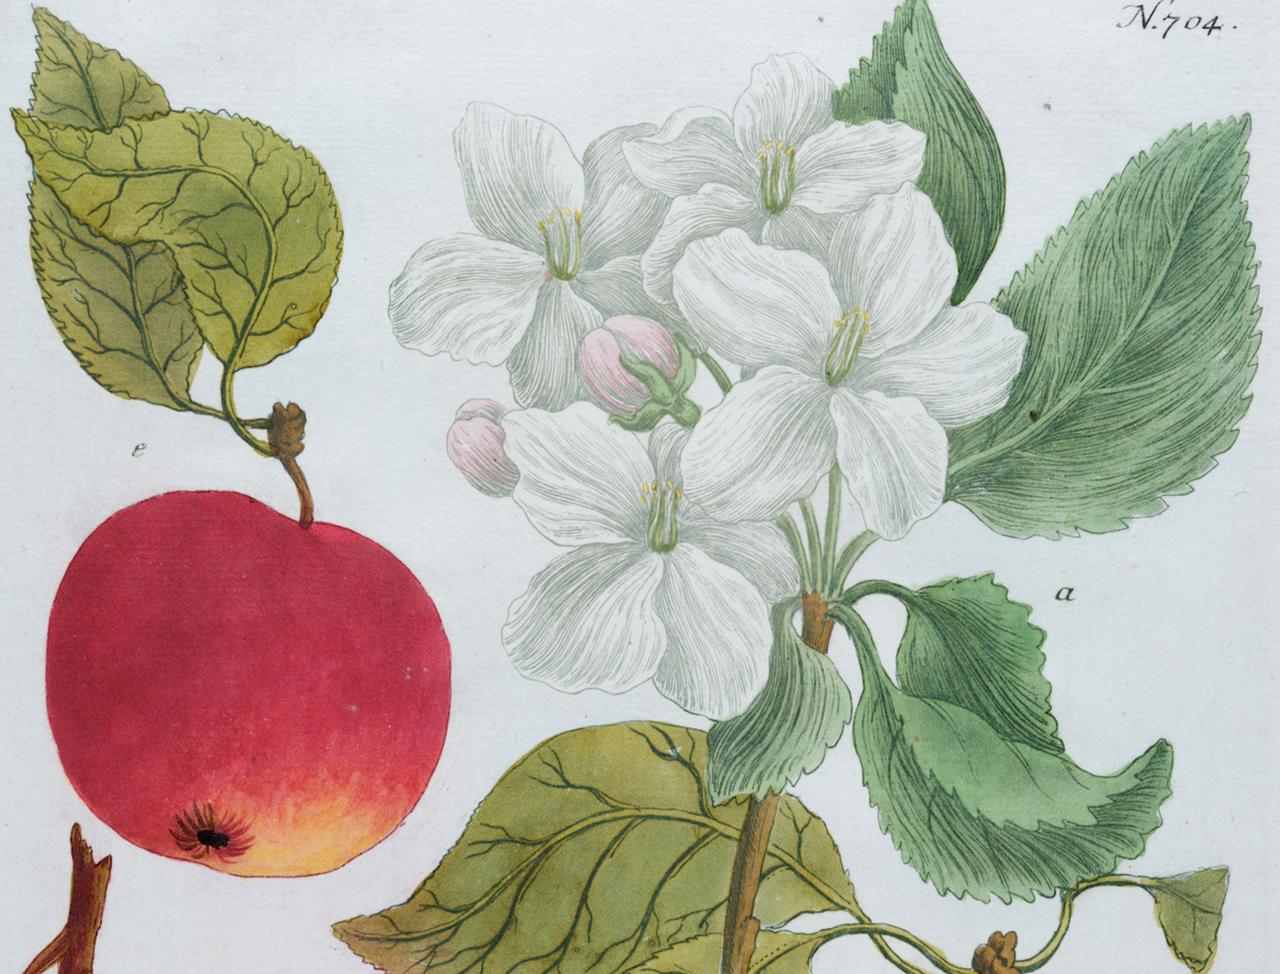 Apple: An 18th Century Hand-colored Botanical Engraving by J. Weinmann - Naturalistic Print by Johann Wilhelm Weinmann